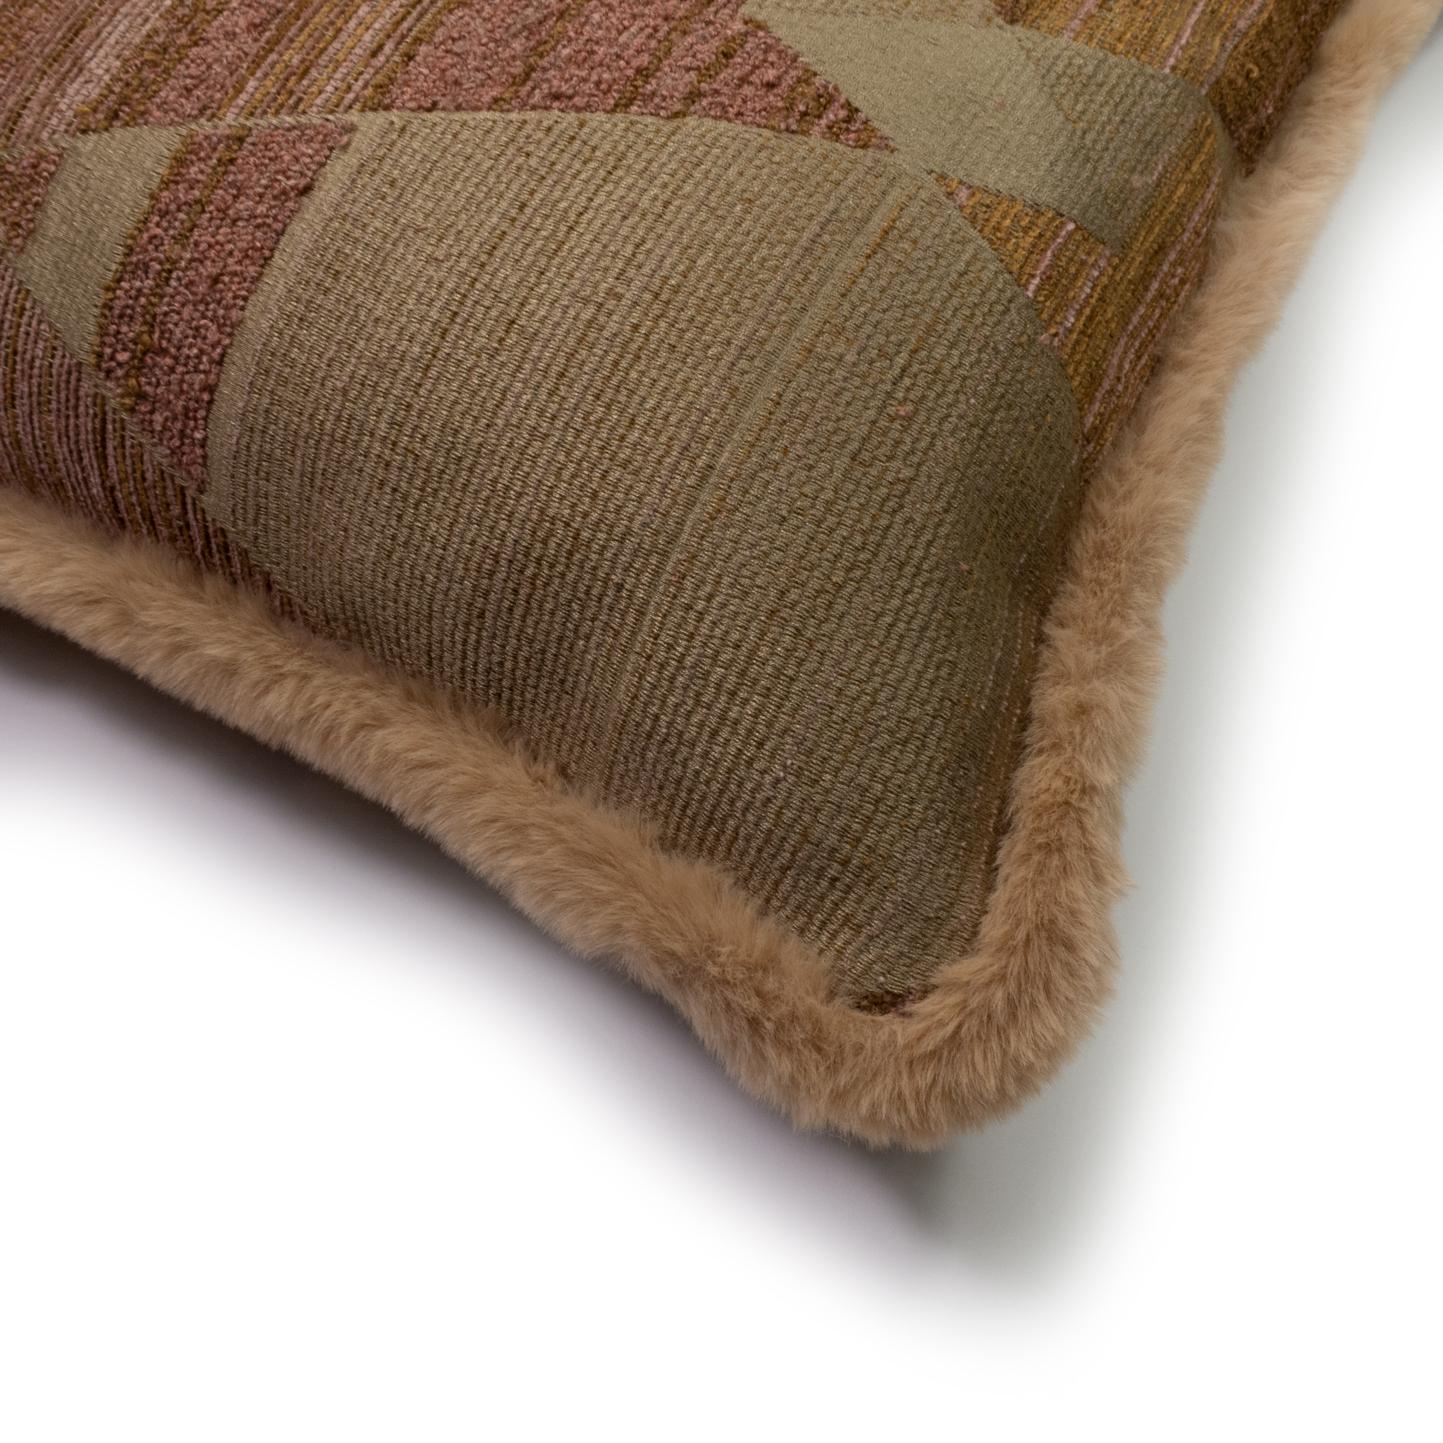 Belgian Cushion / Pillow Pattern Supreme Coup De Foudre Rose by Evoution21 For Sale